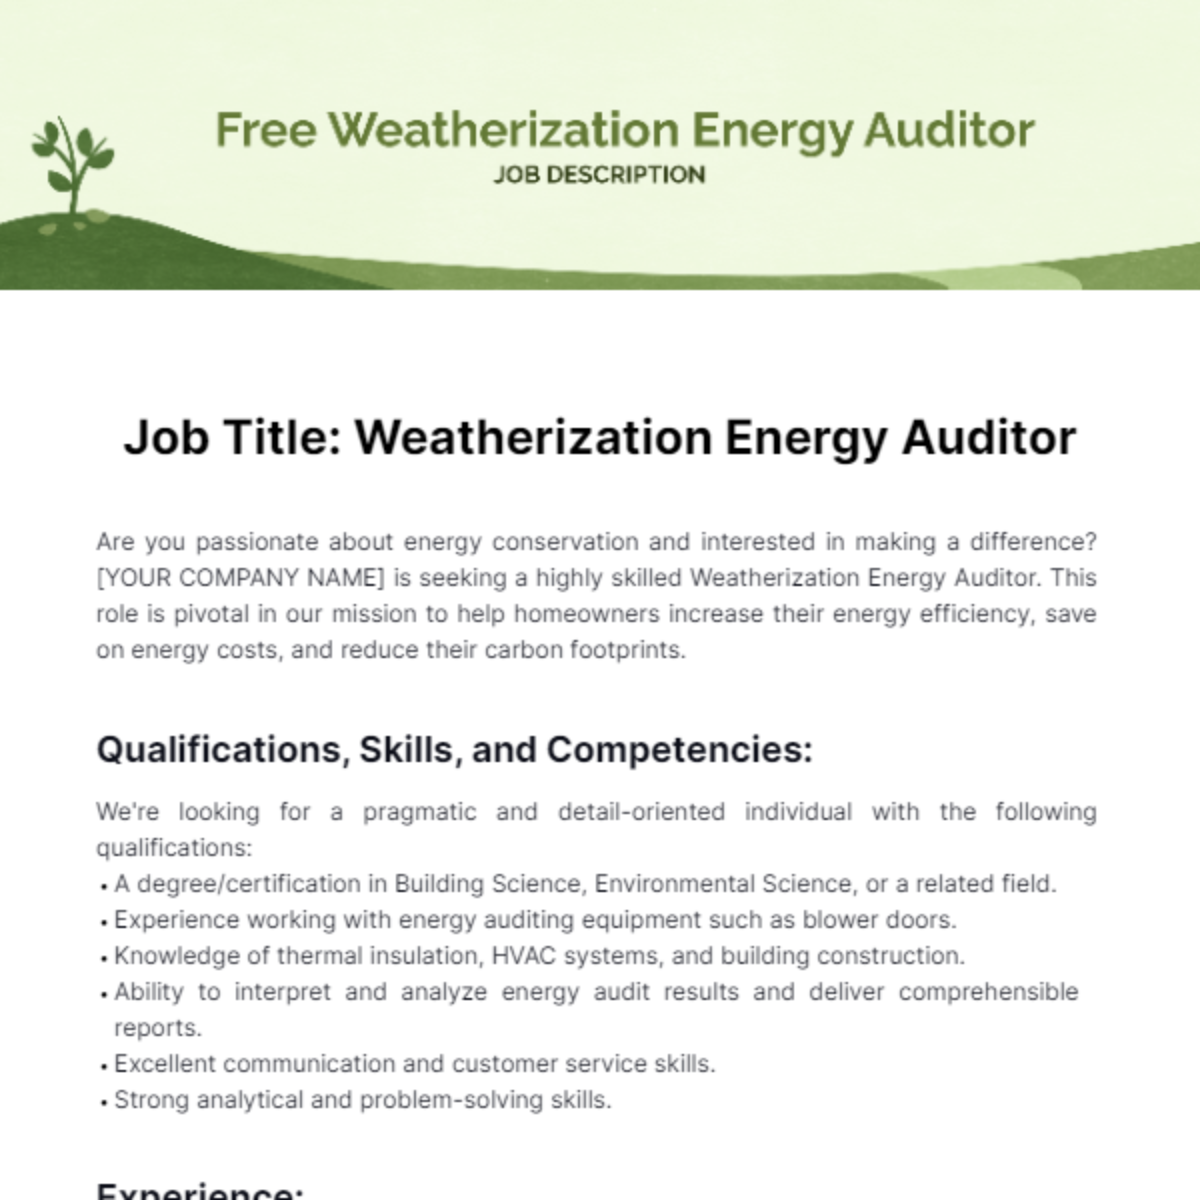 Free Weatherization Energy Auditor Job Description Template